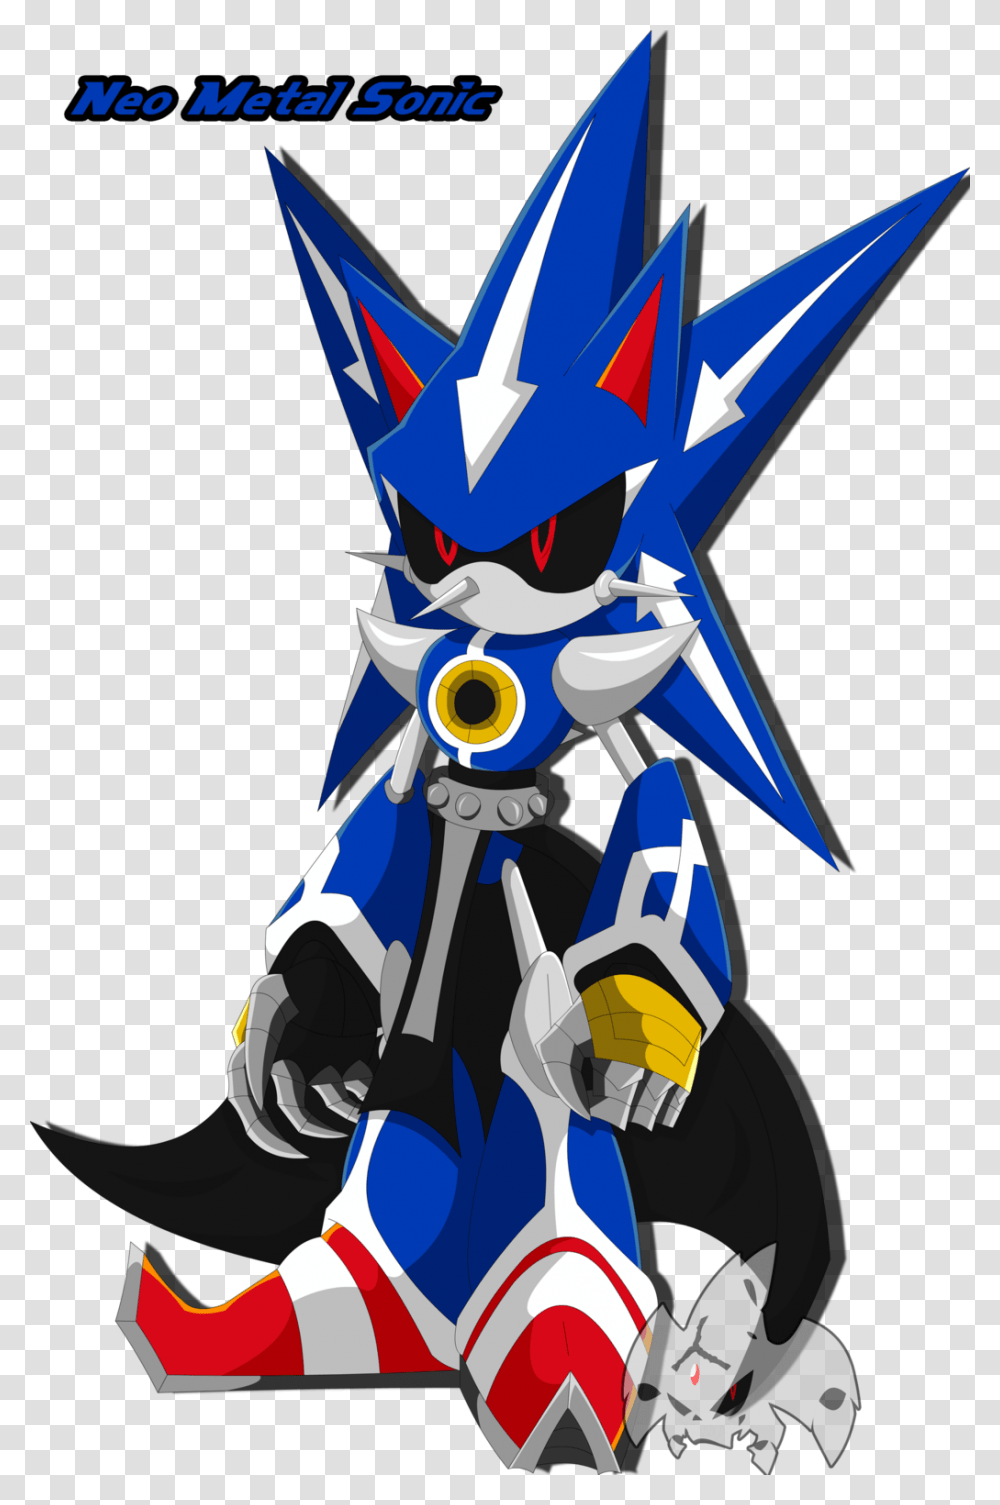 Astro Boy Vs Megaman Vs Mecha Naruto Vs Metal Sonic Neo Metal Sonic Sonic X, Costume, Robot Transparent Png